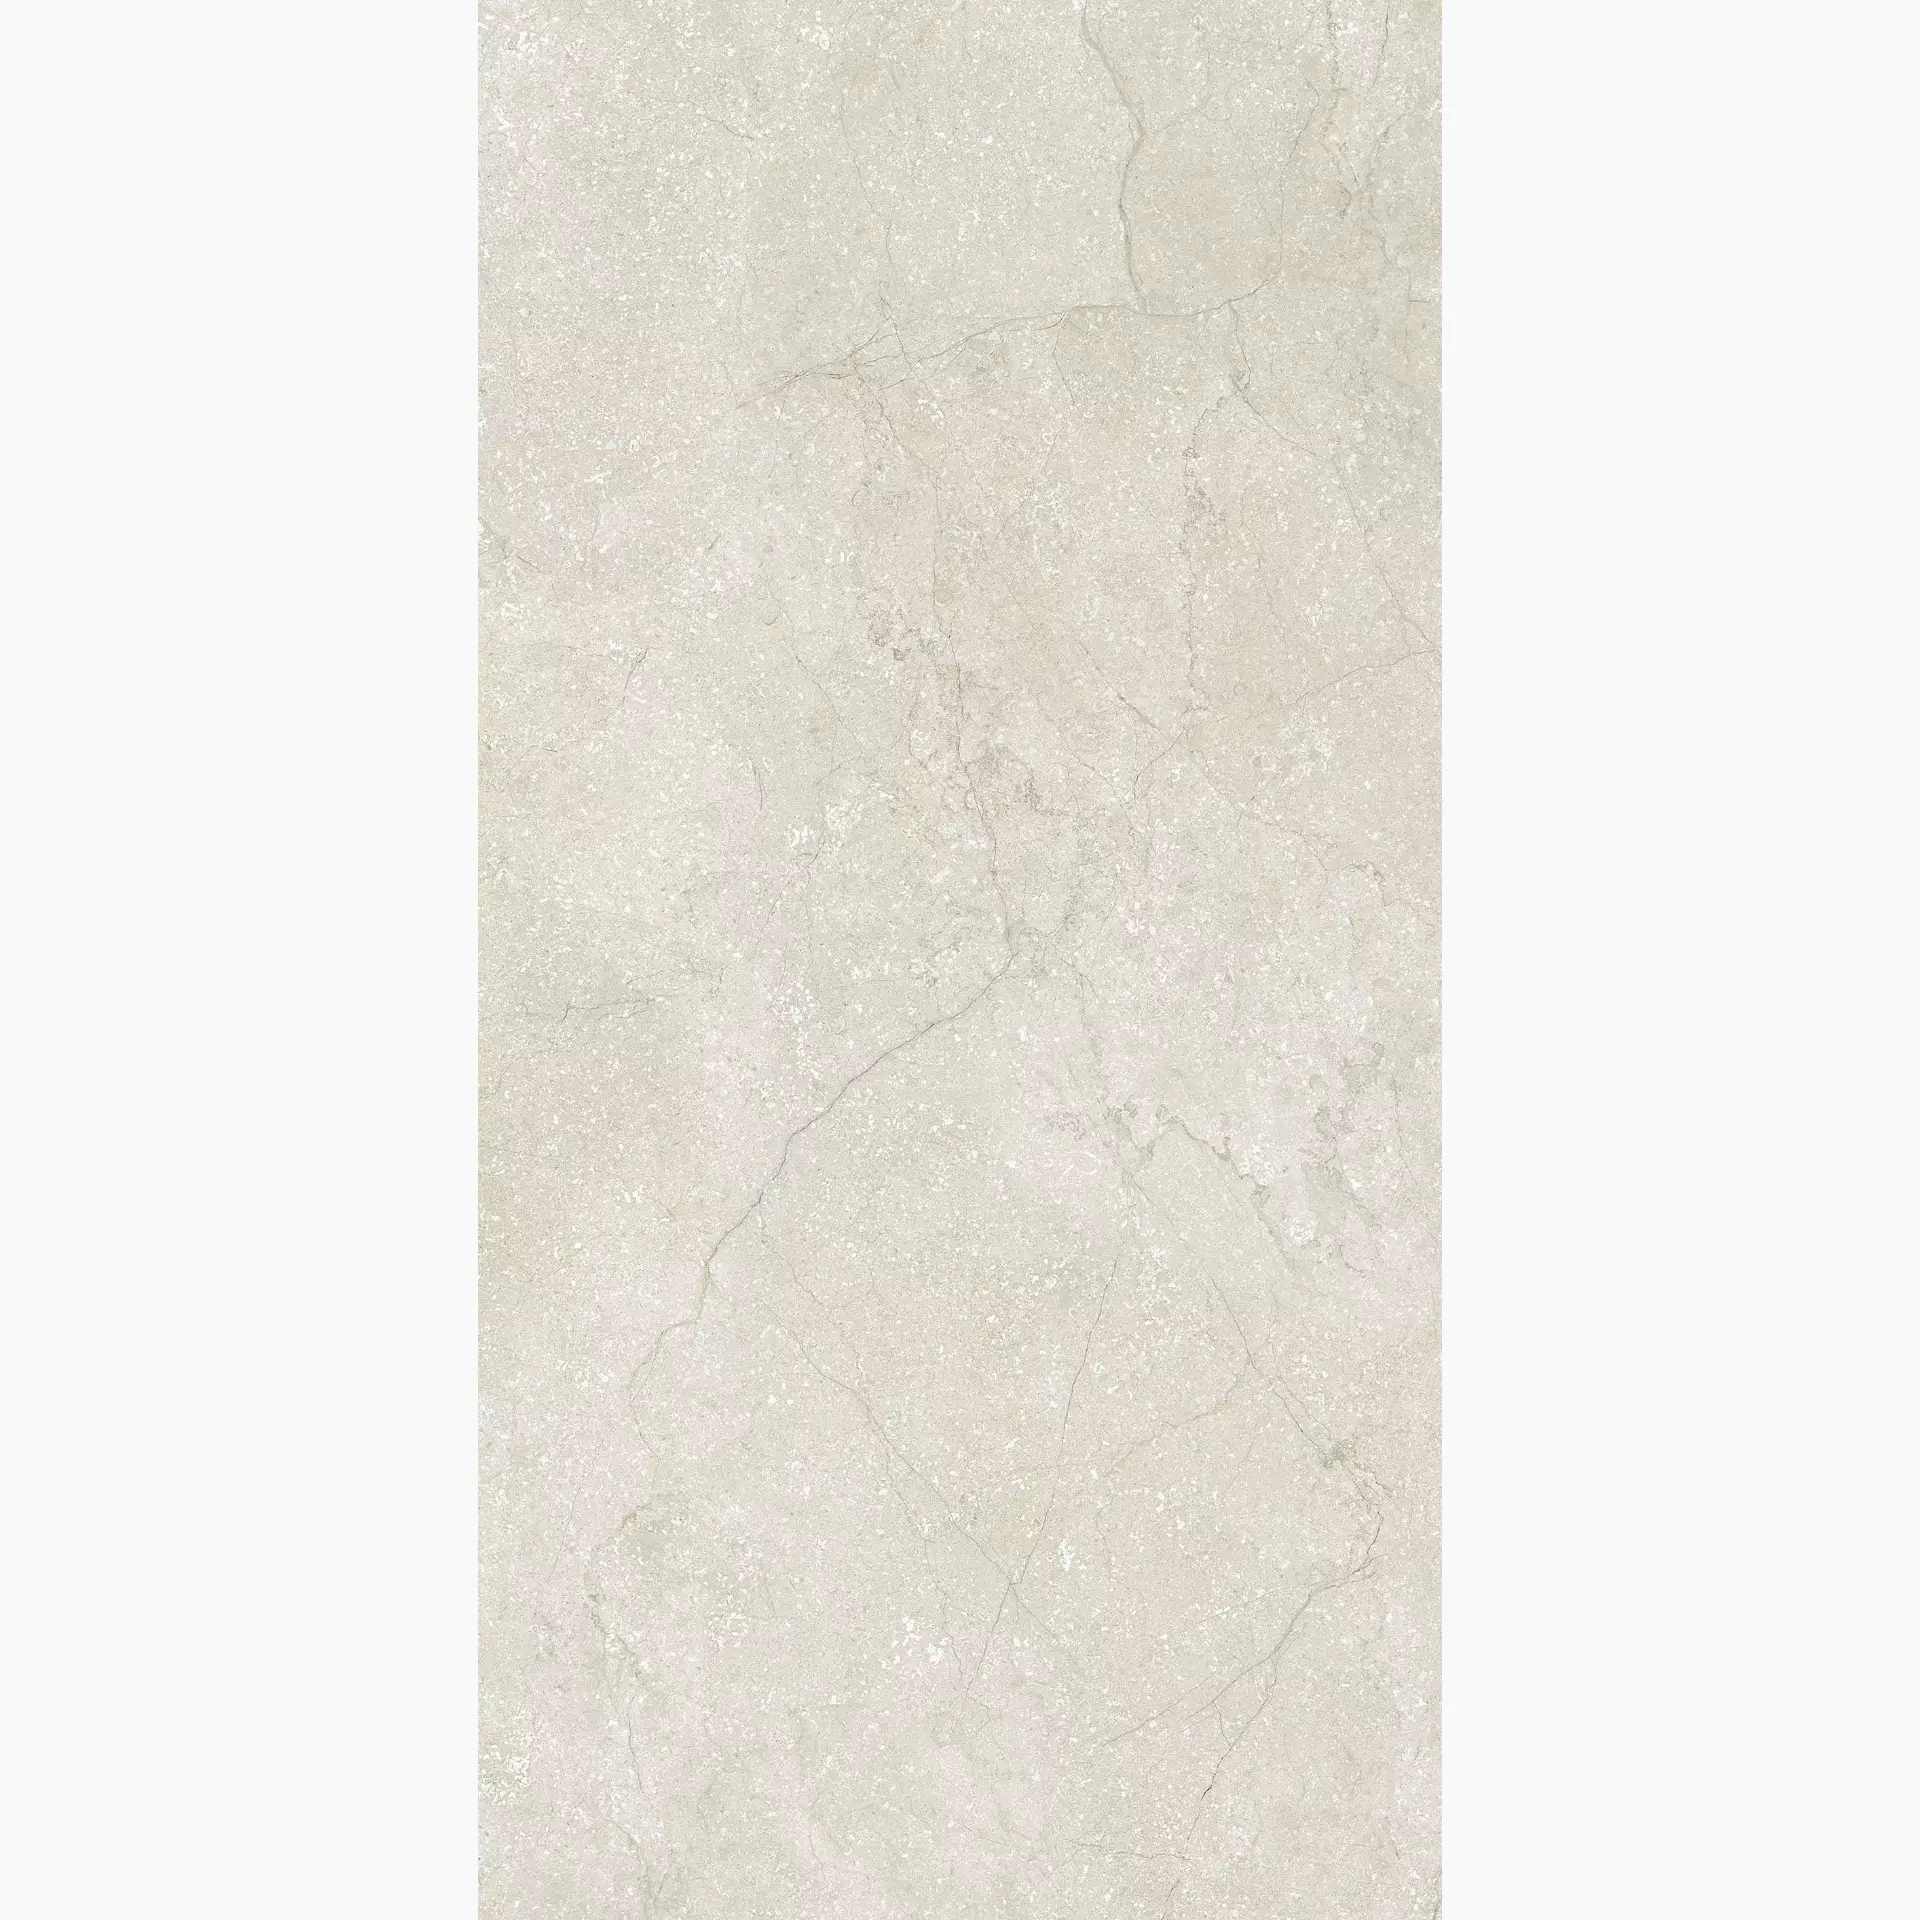 Florim Stone Life Cotton Naturale – Matt 779273 60x120cm rectified 6mm